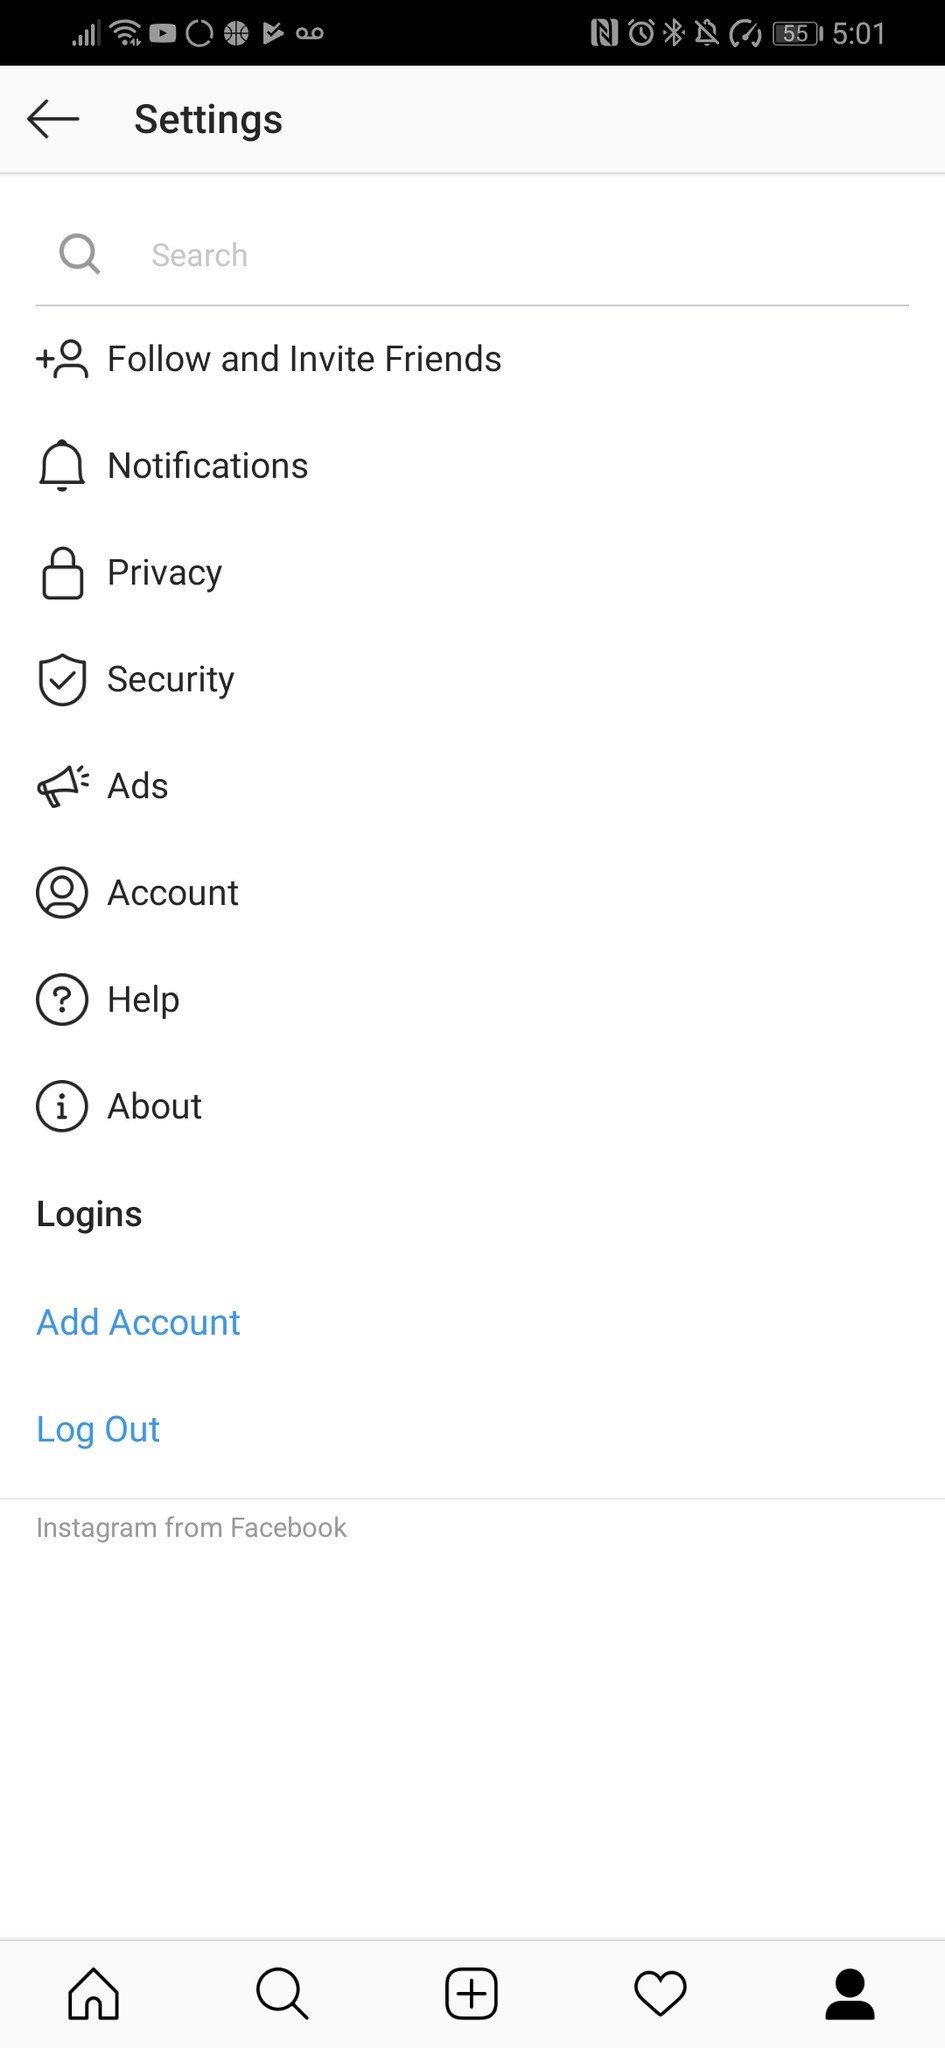 Instagram privacy settings screens